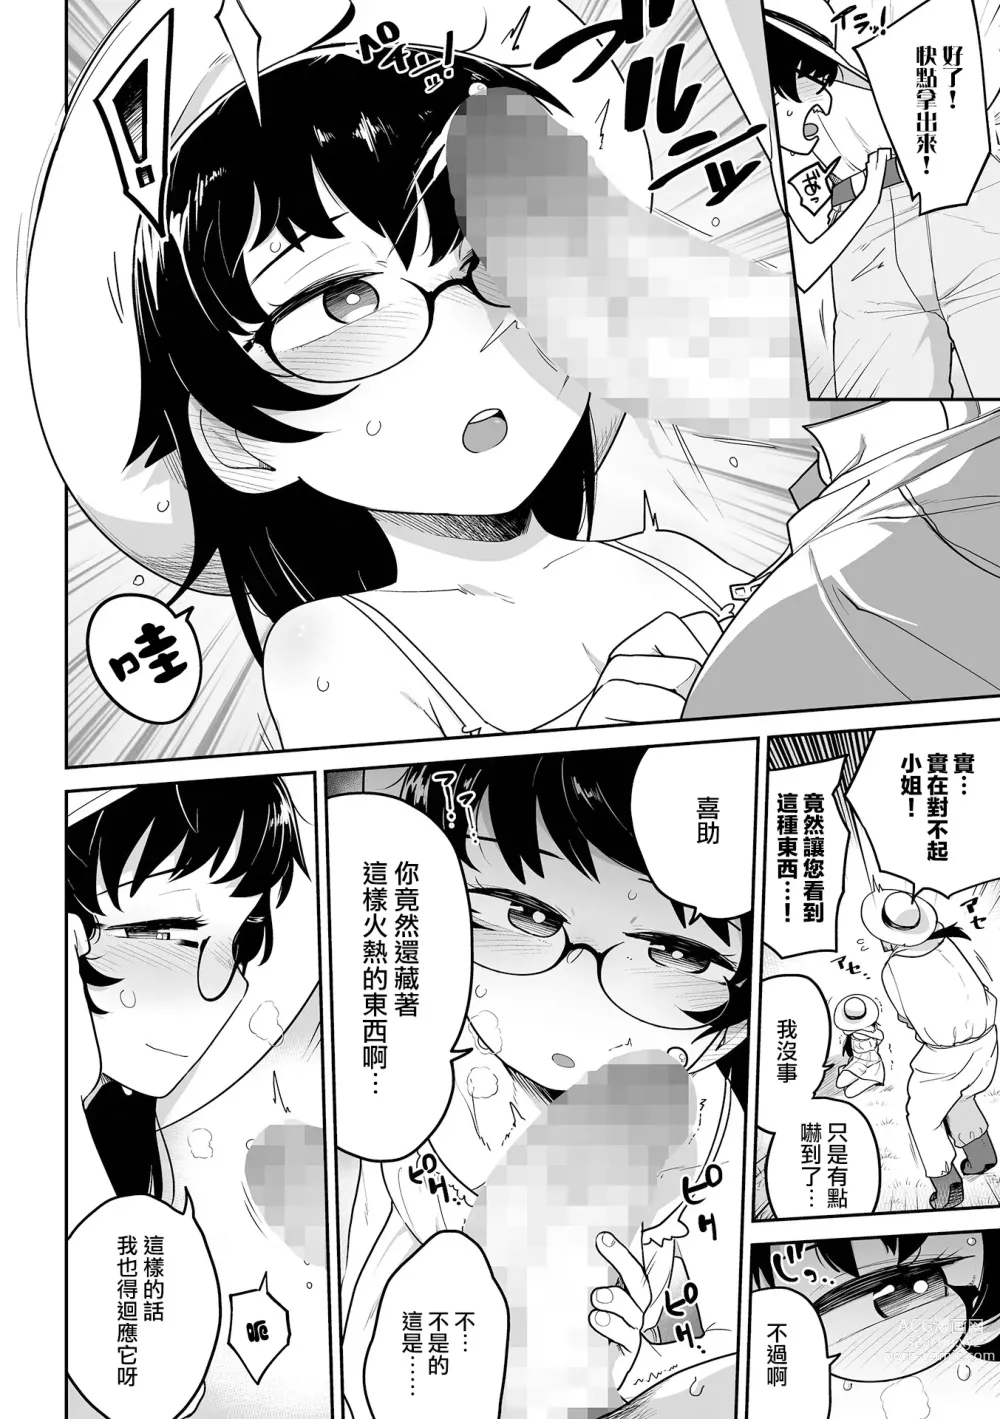 Page 9 of manga 大叔與蘿莉 新手的必經之路